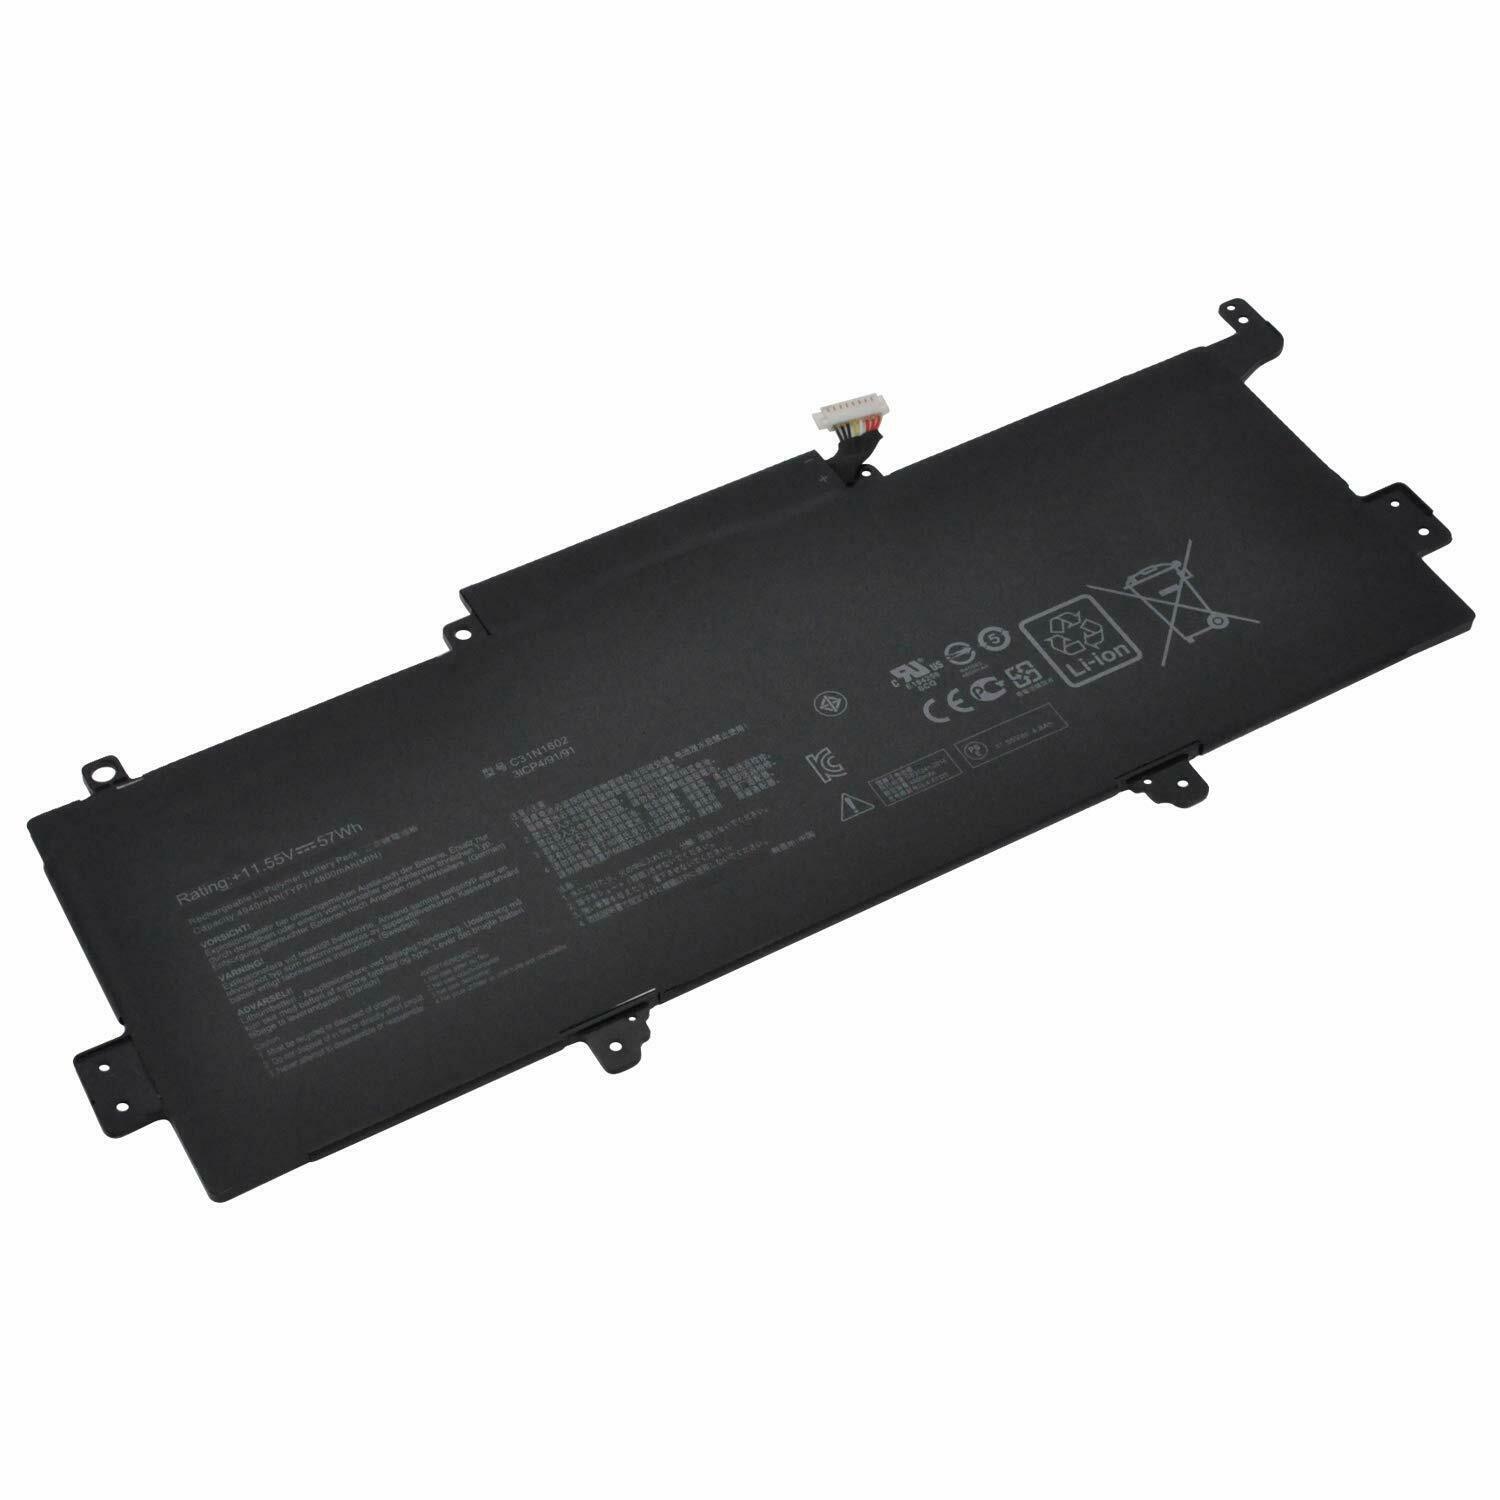 C31N1602 ASUS Zenbook U3000U UX330U UX330UA 0B200-02090000 compatible battery